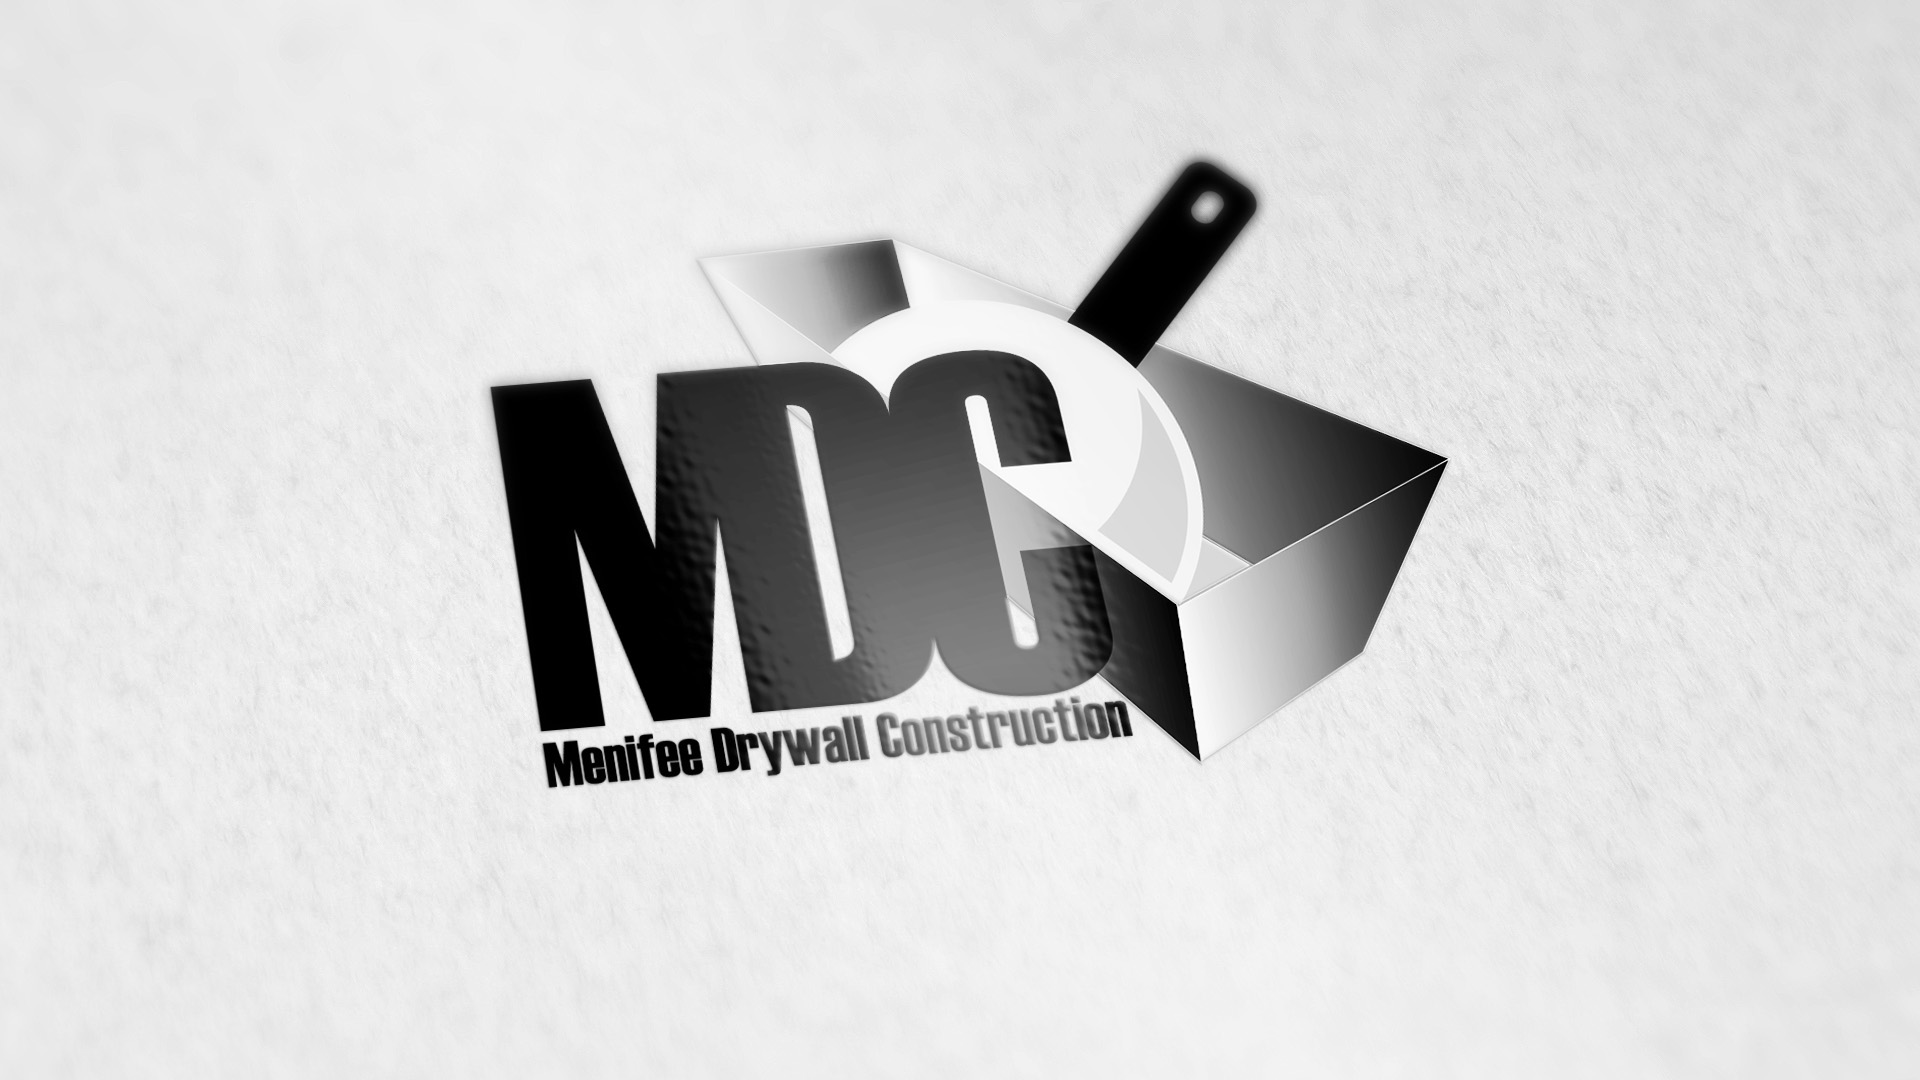 Large MDC glossy logo on white cardstock.